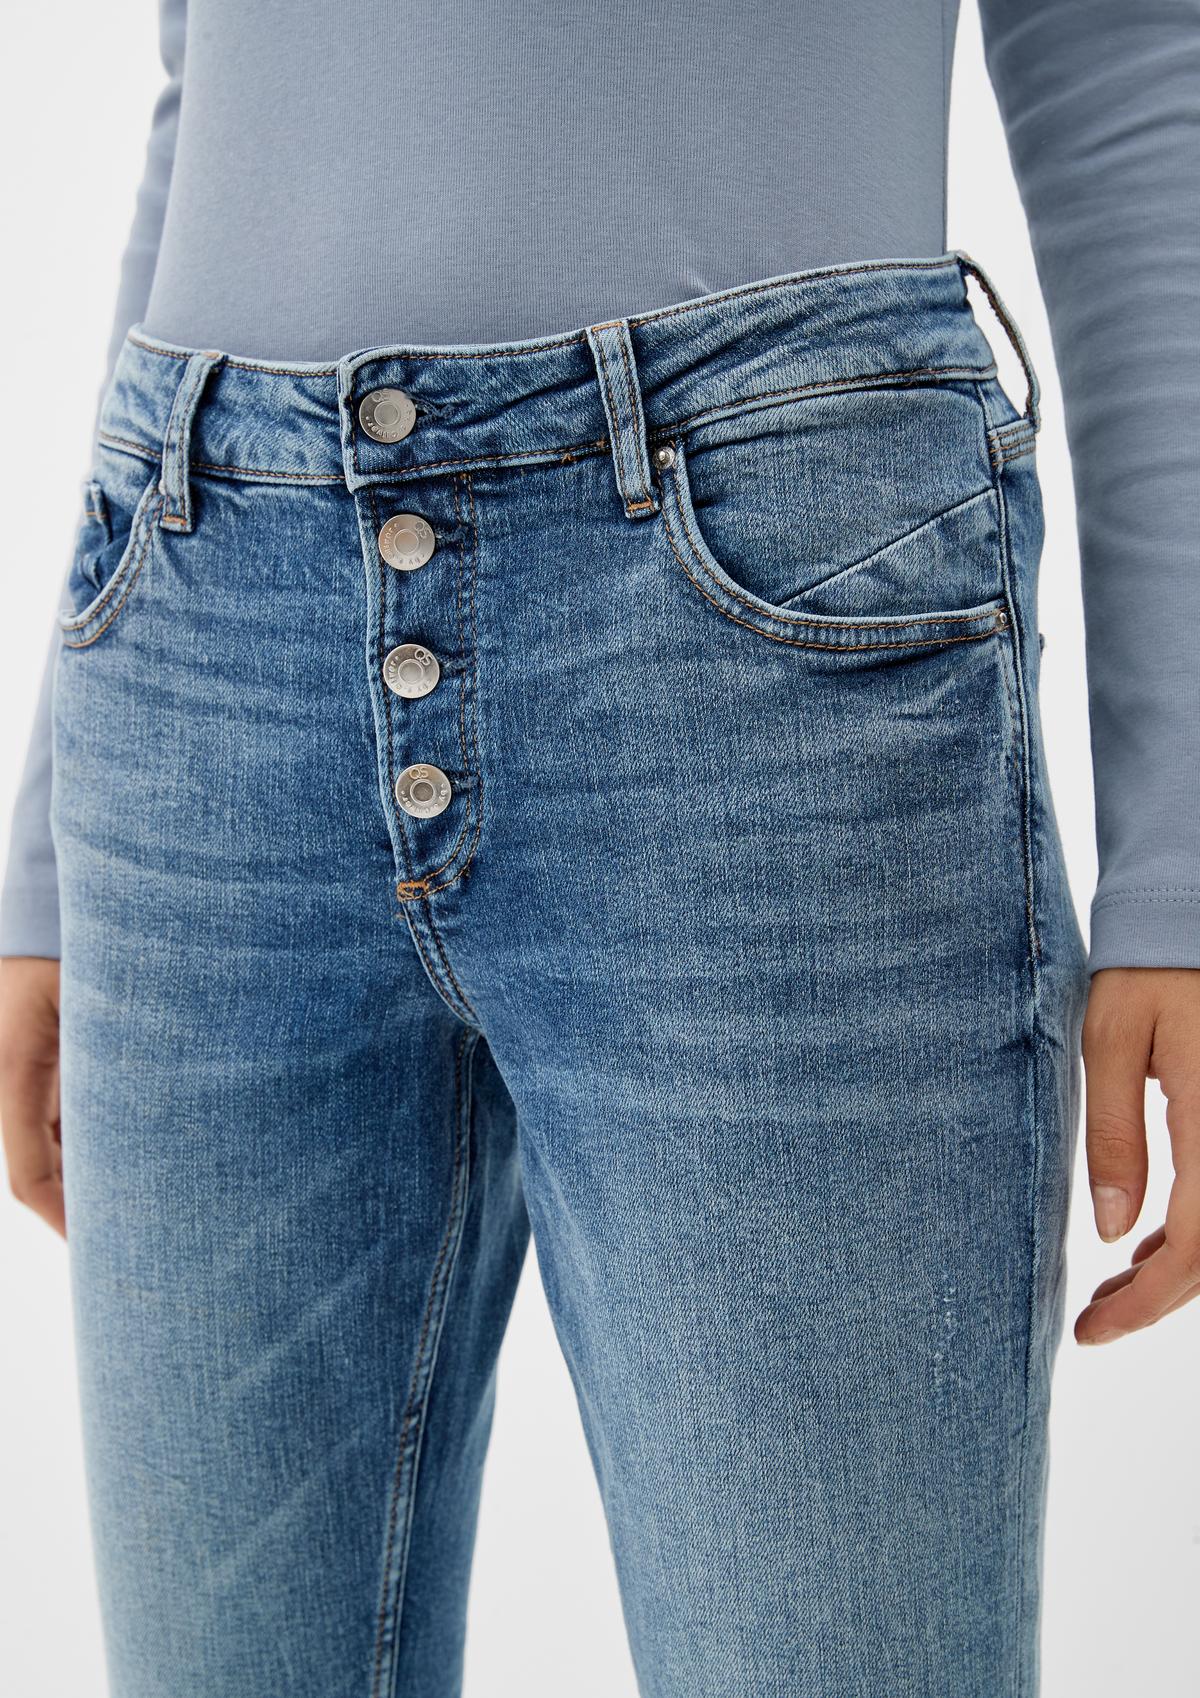 Catie jeans / slim fit / mid rise / slim leg - ocean blue